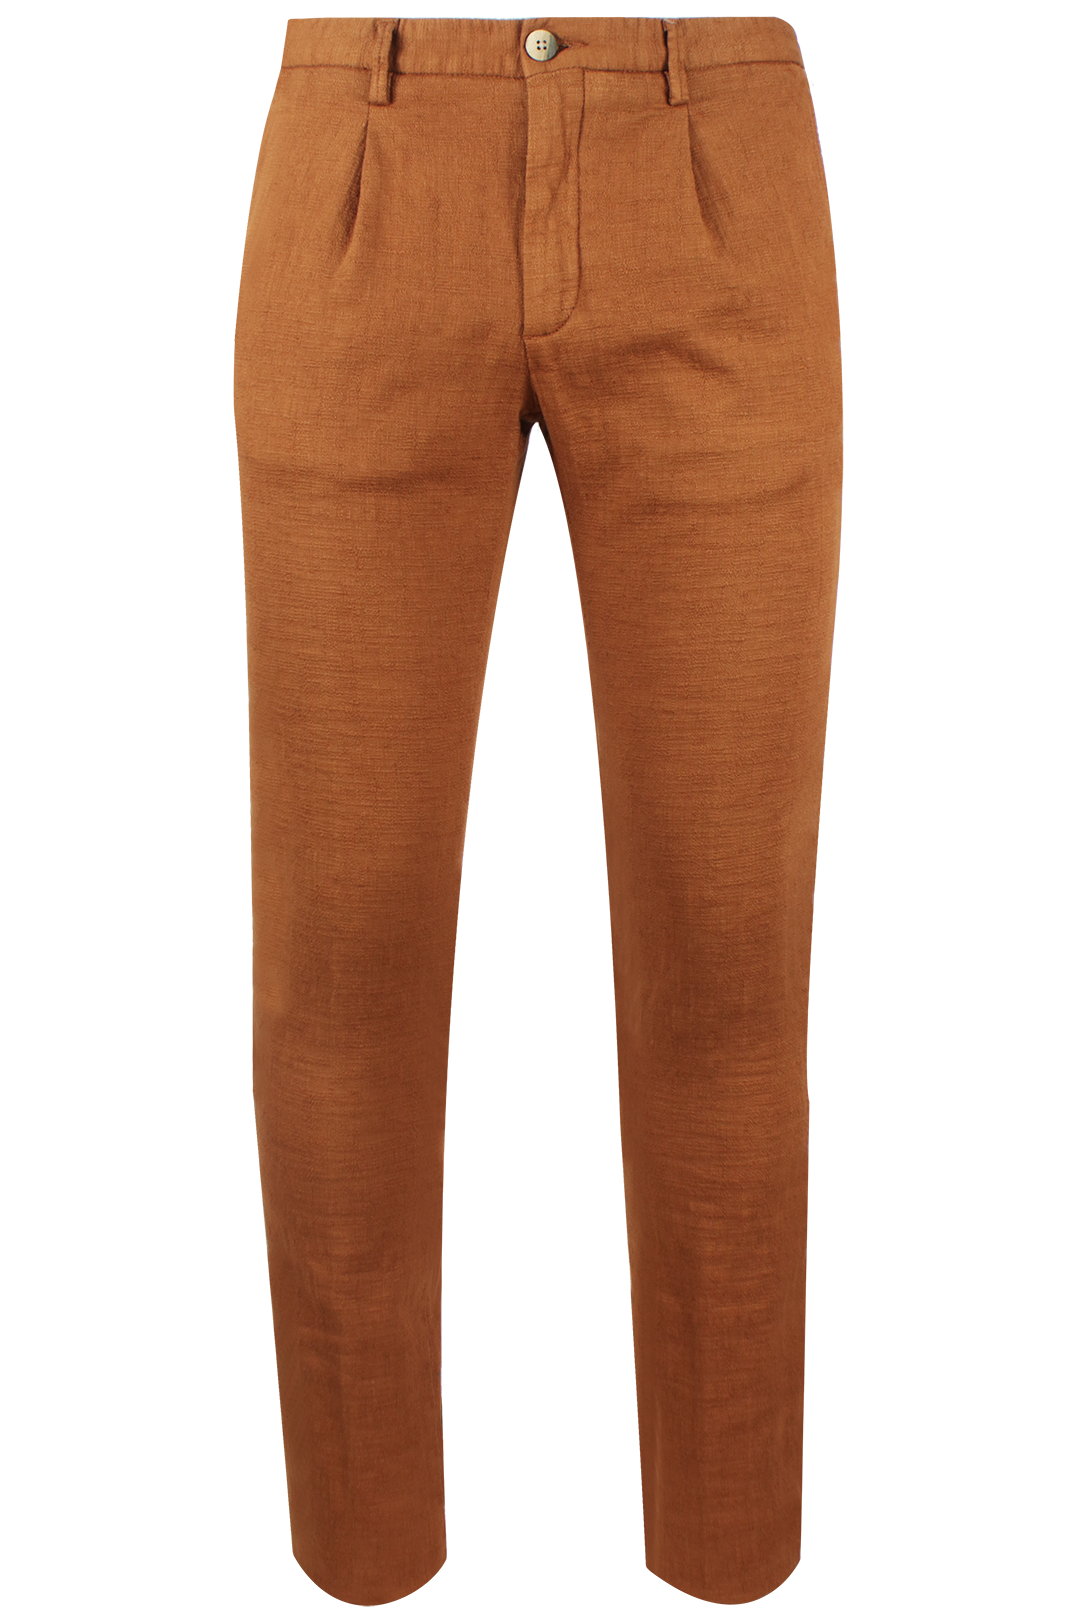 Pantalone pince cotone tinto capo arancio